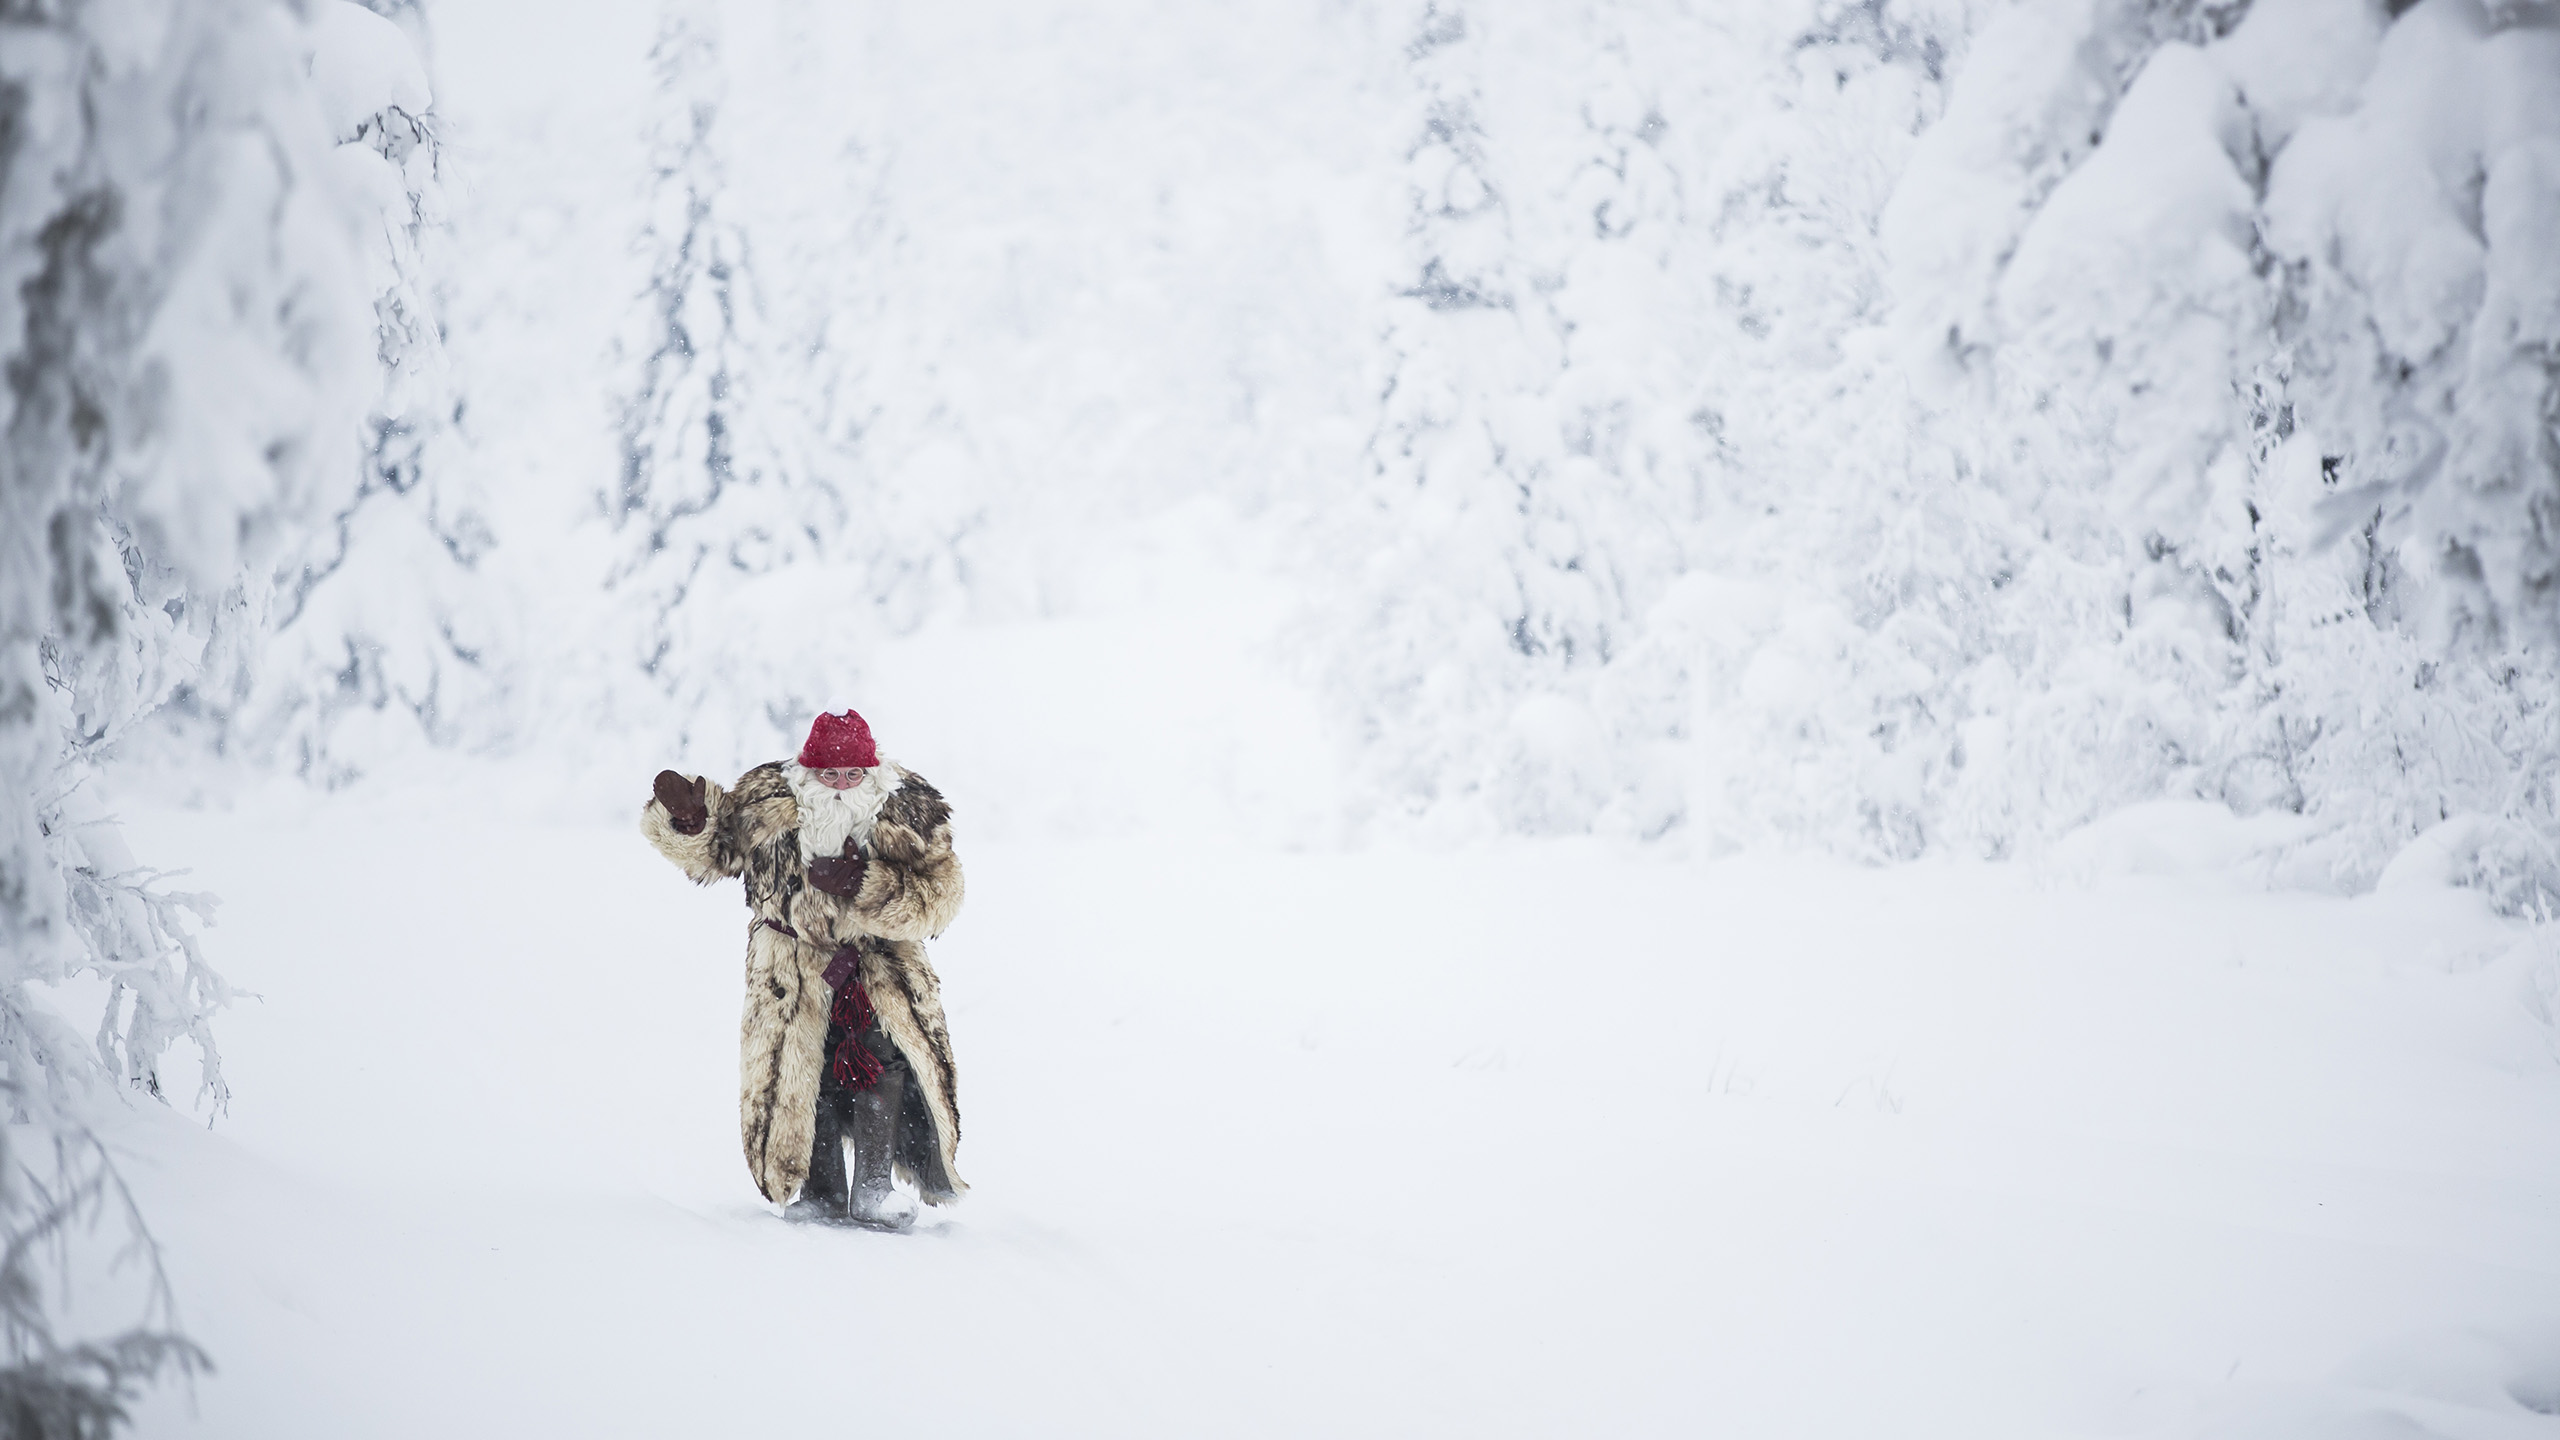 Vemdalen-Storhogna-jultomten går i snörik skog